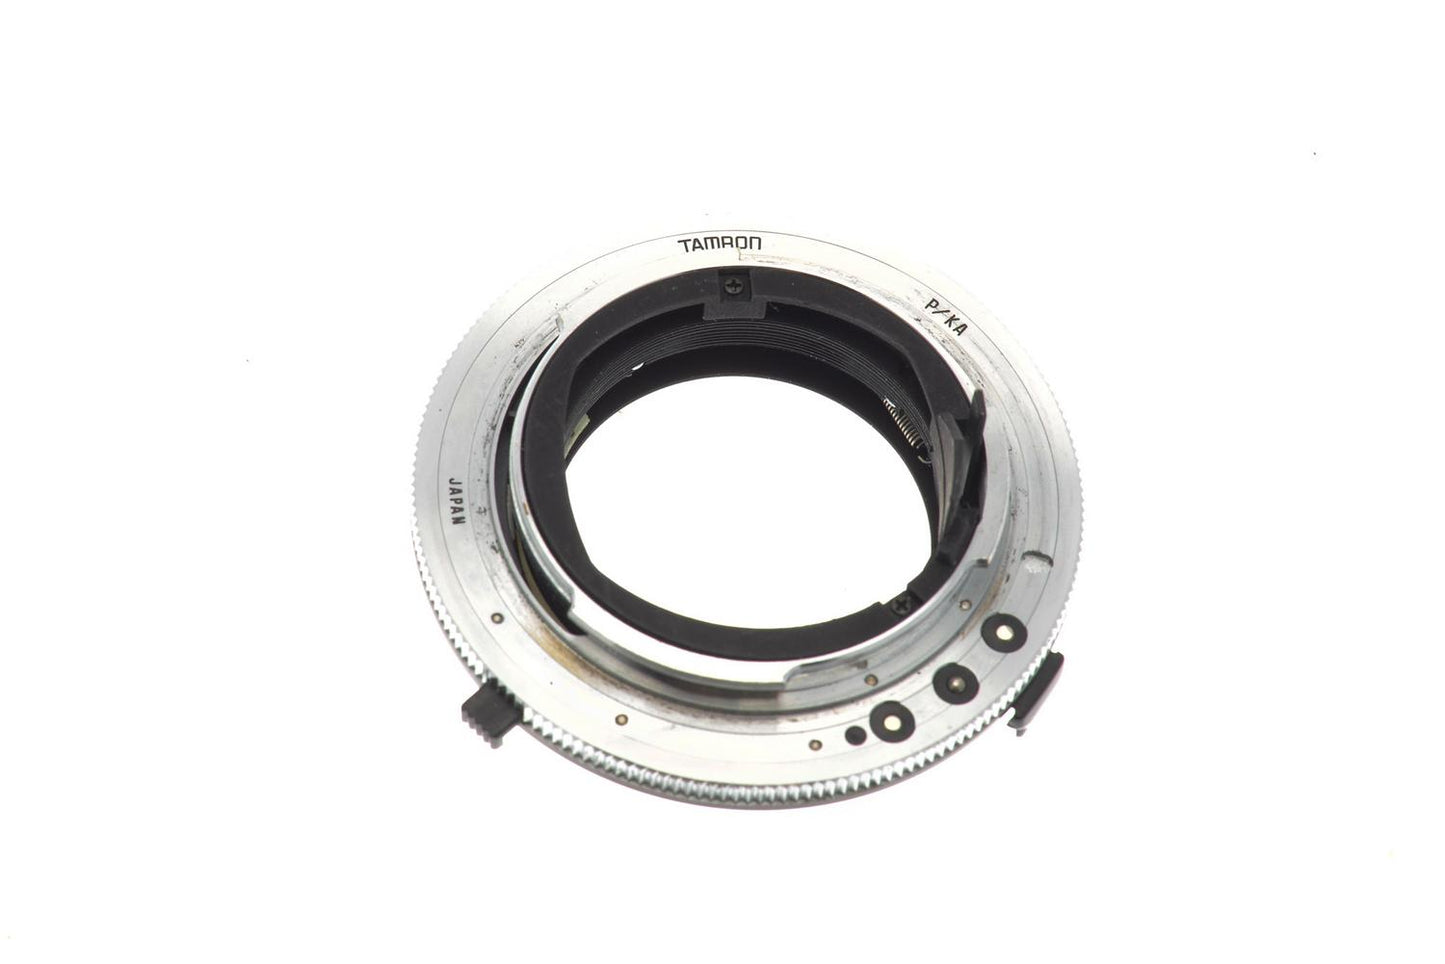 Tamron Adaptall 2 - Pentax KA Adapter - Lens Adapter